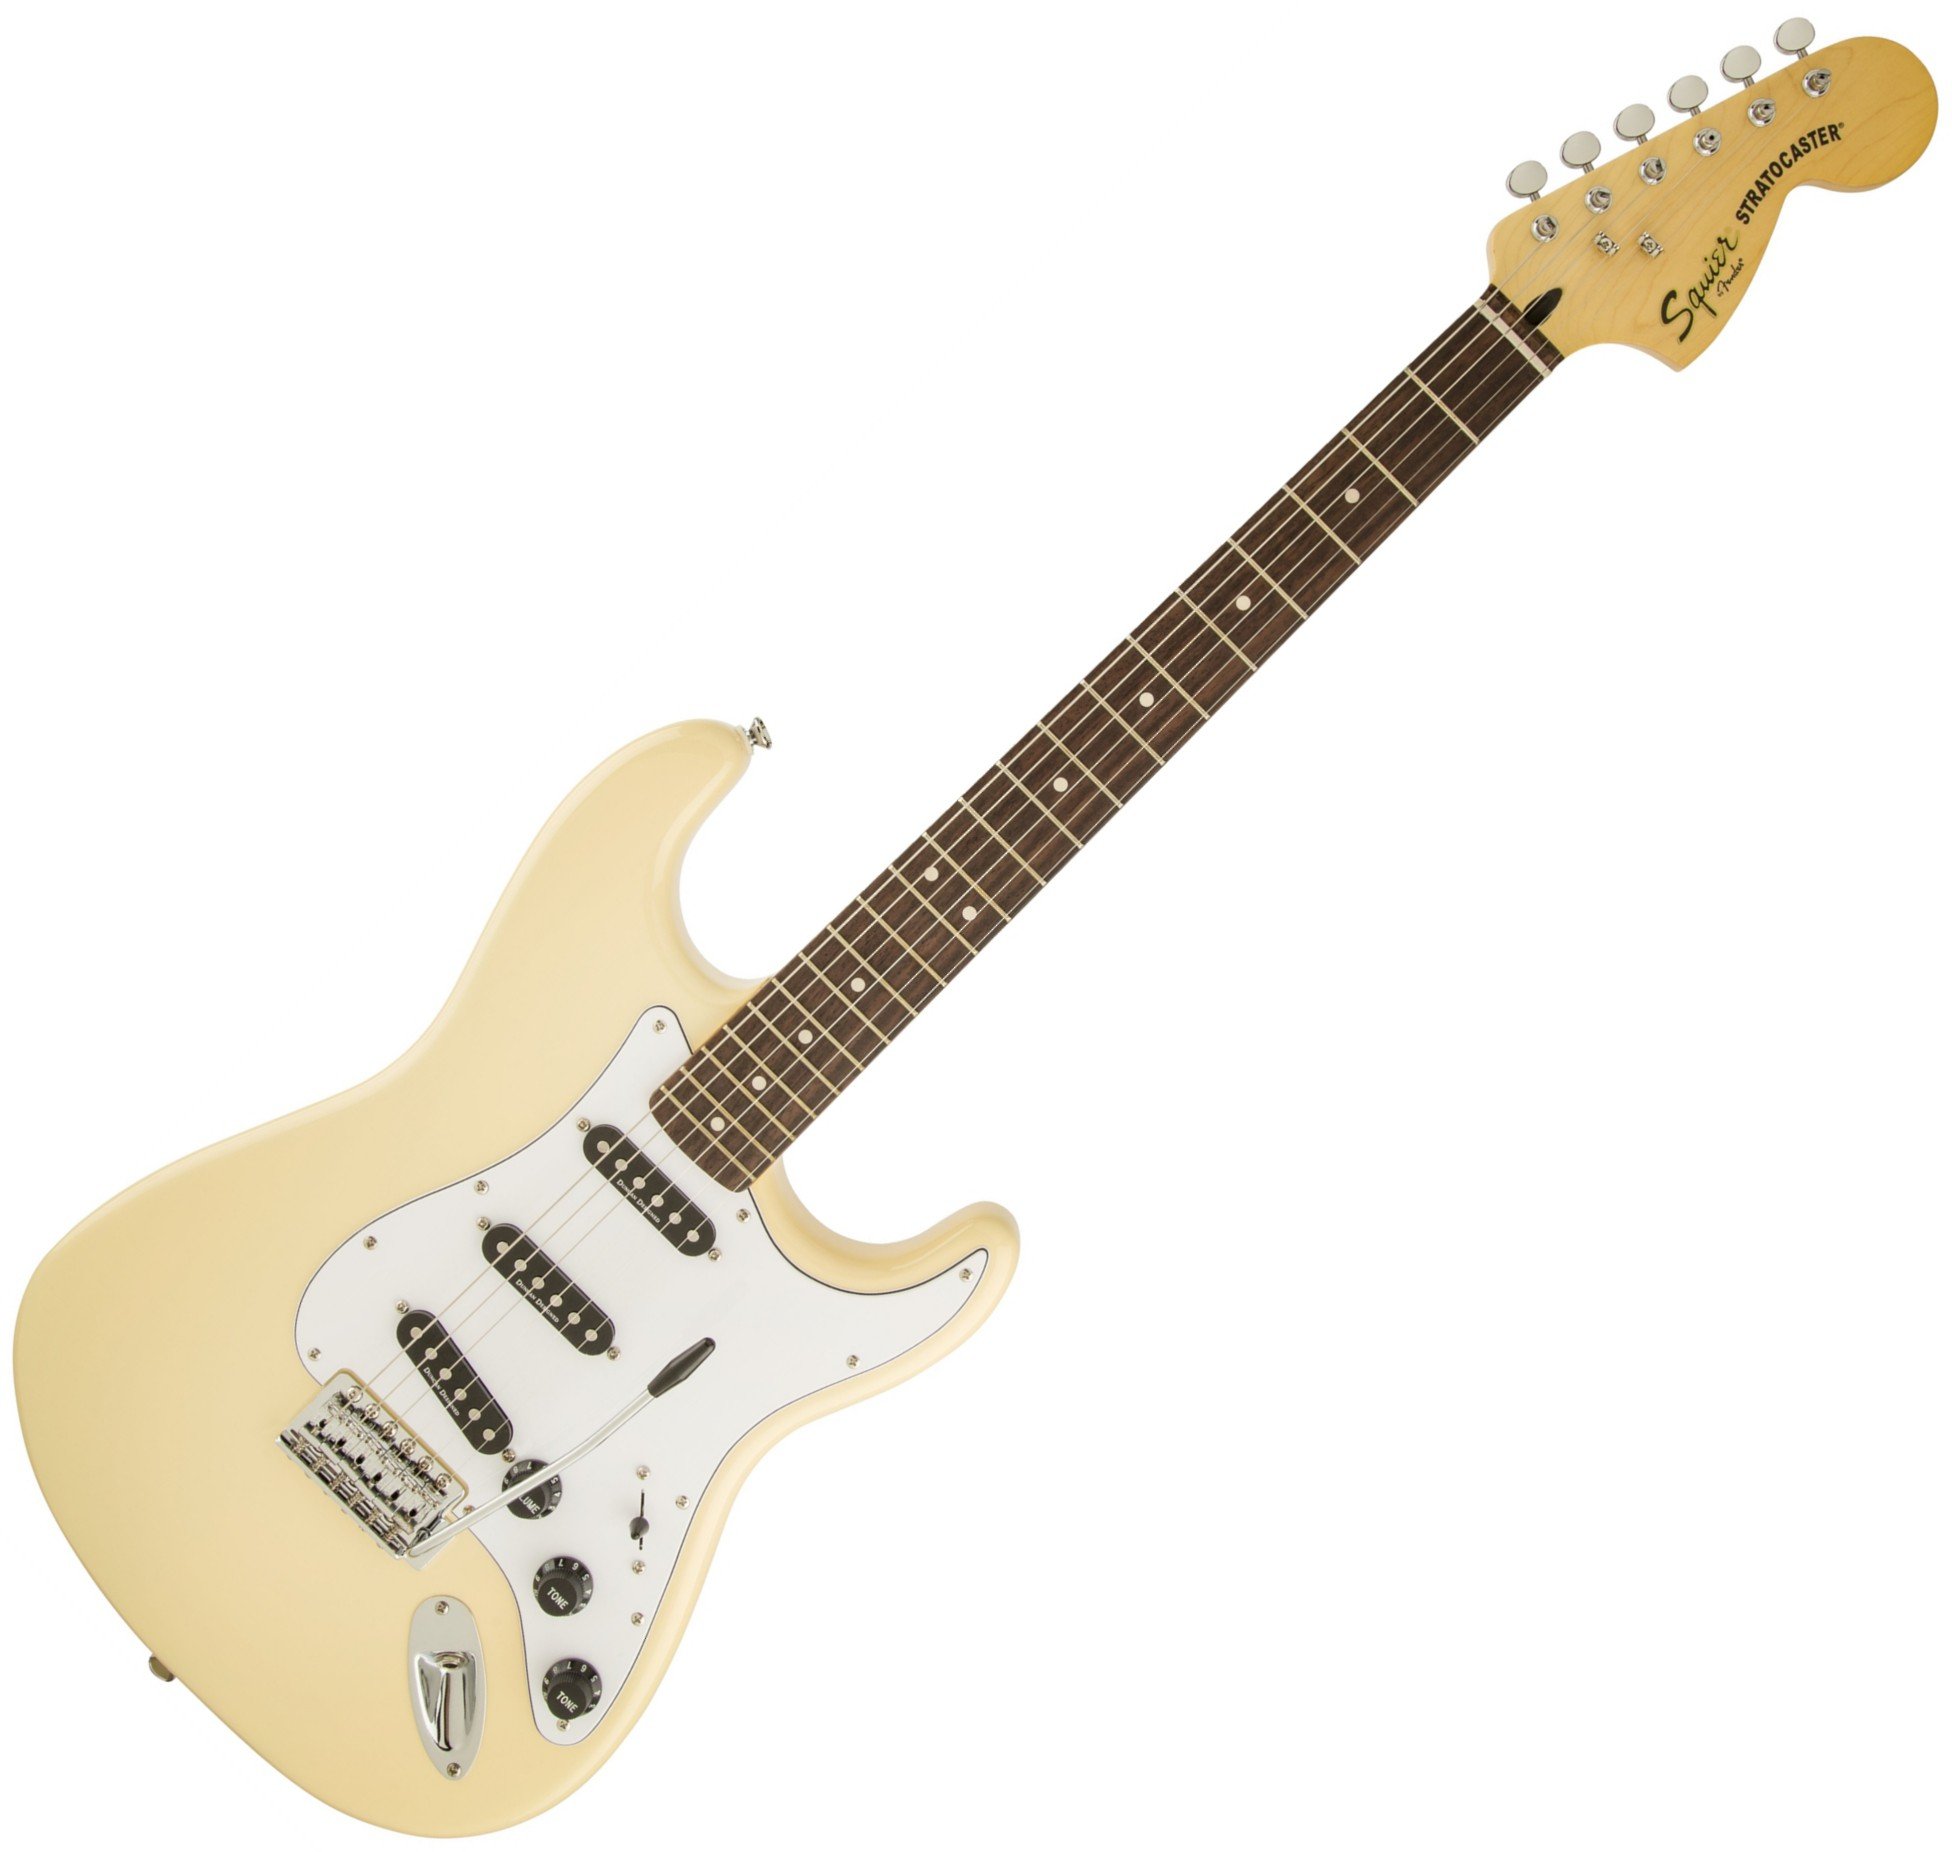 Stratocaster цена. Cort g260cs-3ts. Гитара Fender Squier. Электрогитара Cort g260cs-ow. Cort g260 3 TS.